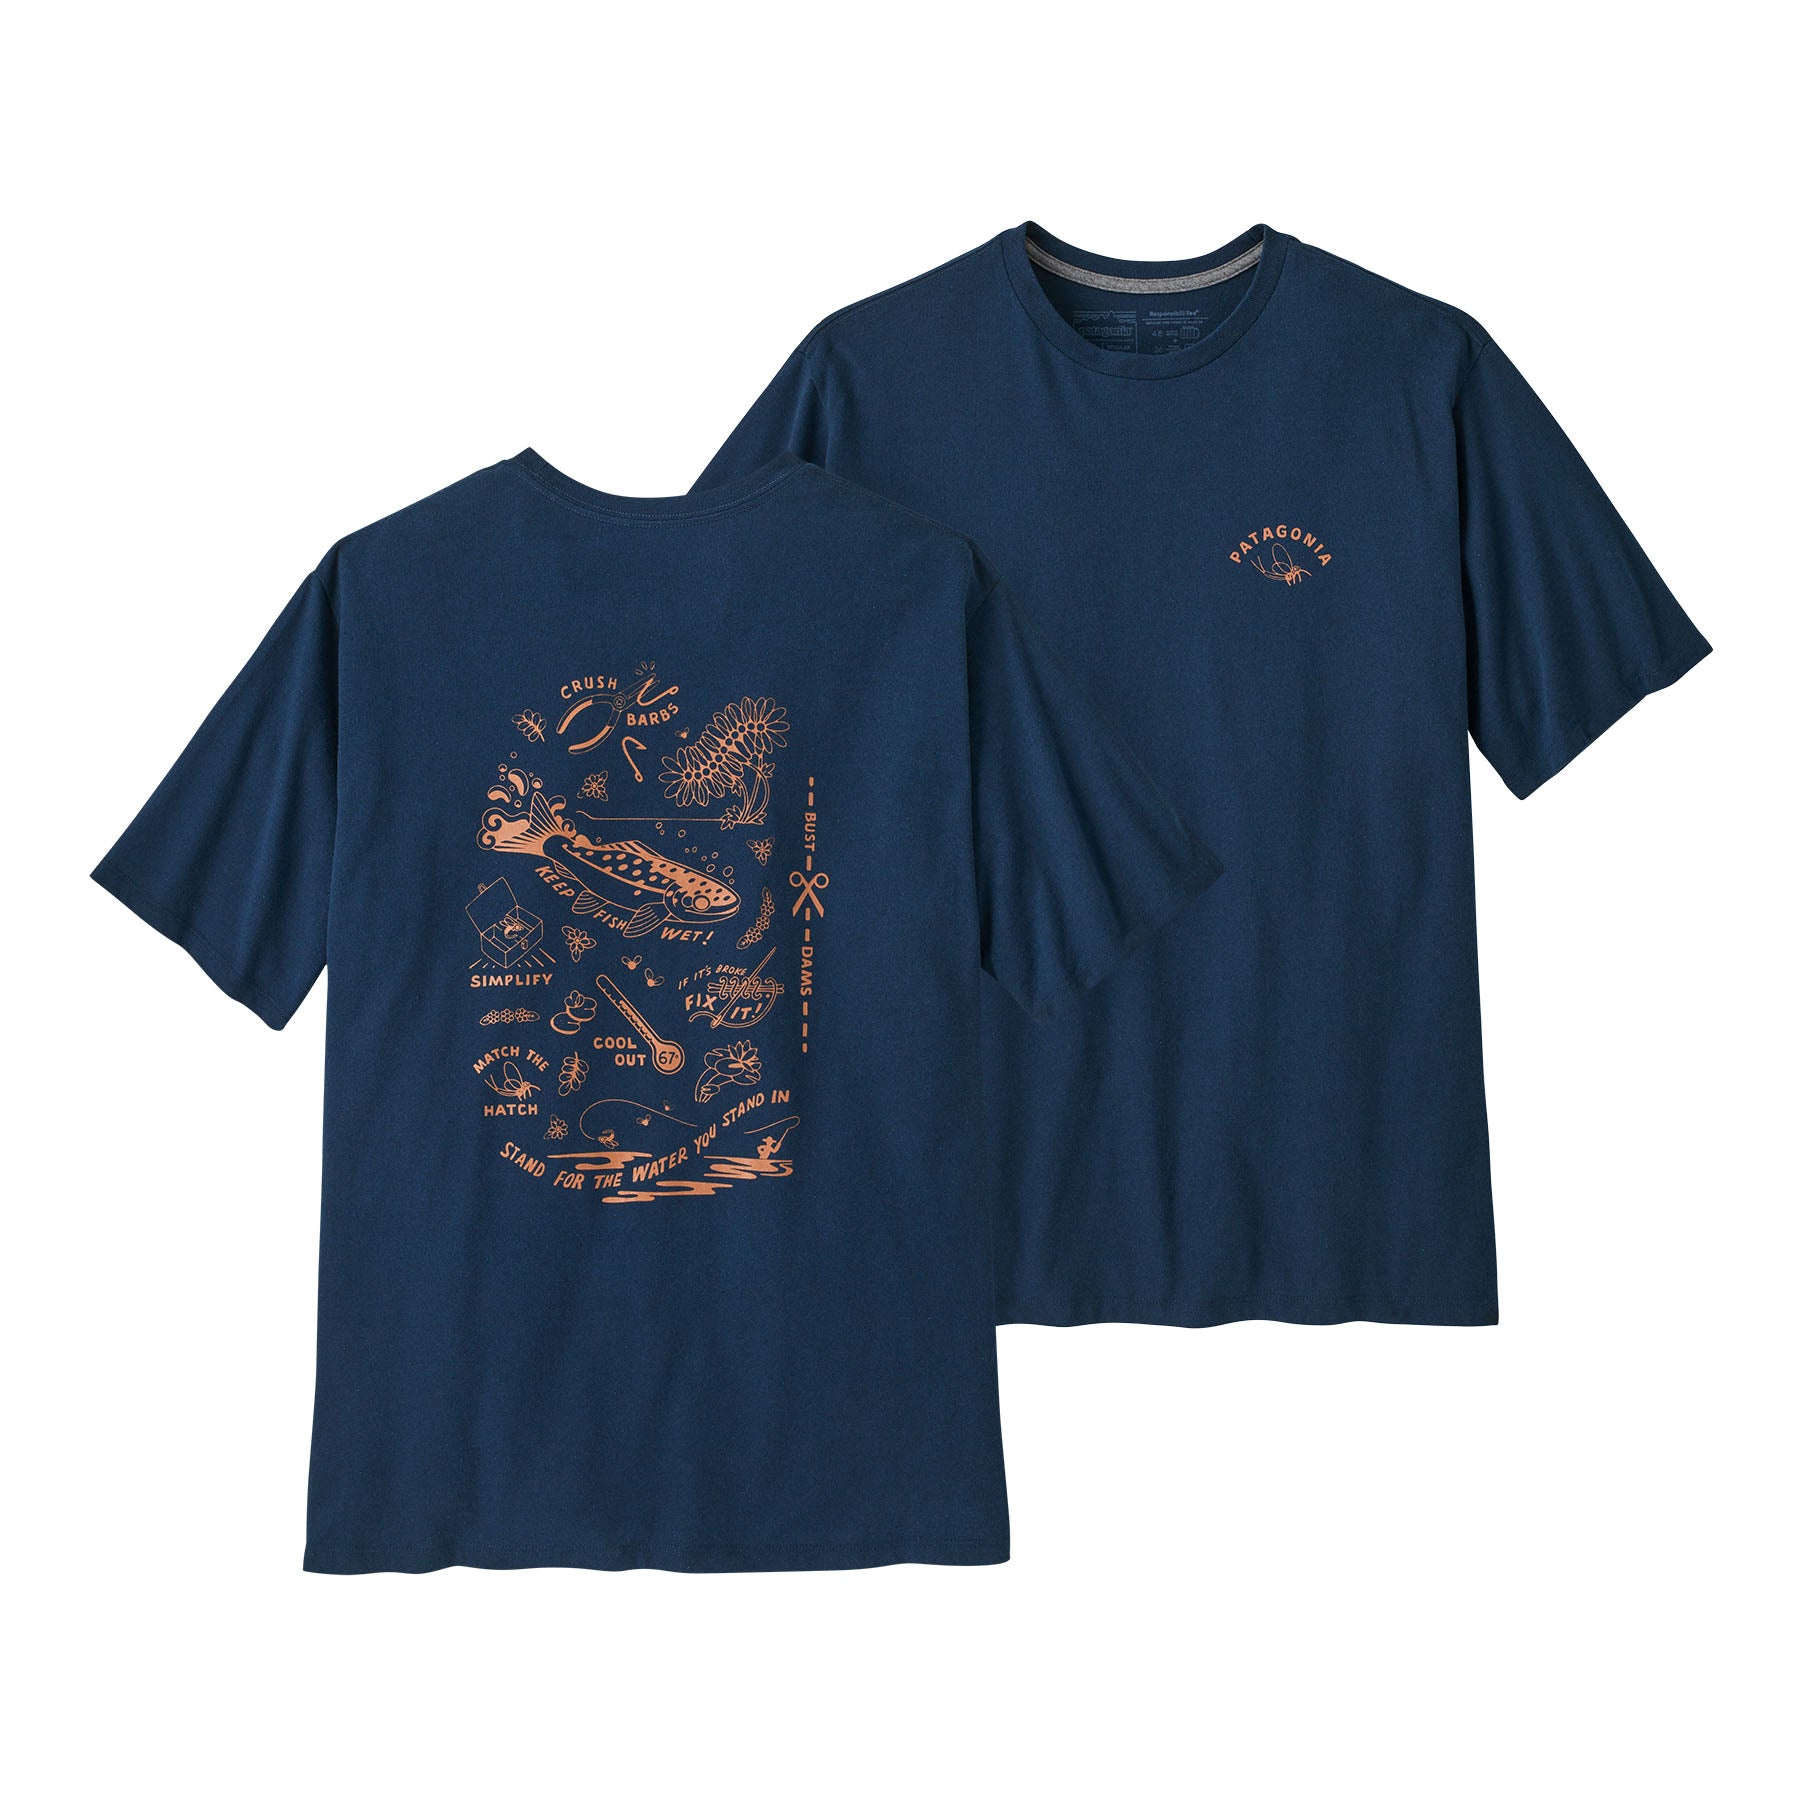 Snowbee XS Fishing Shirt - Sky Blue - XL – PROTEUS MARINE